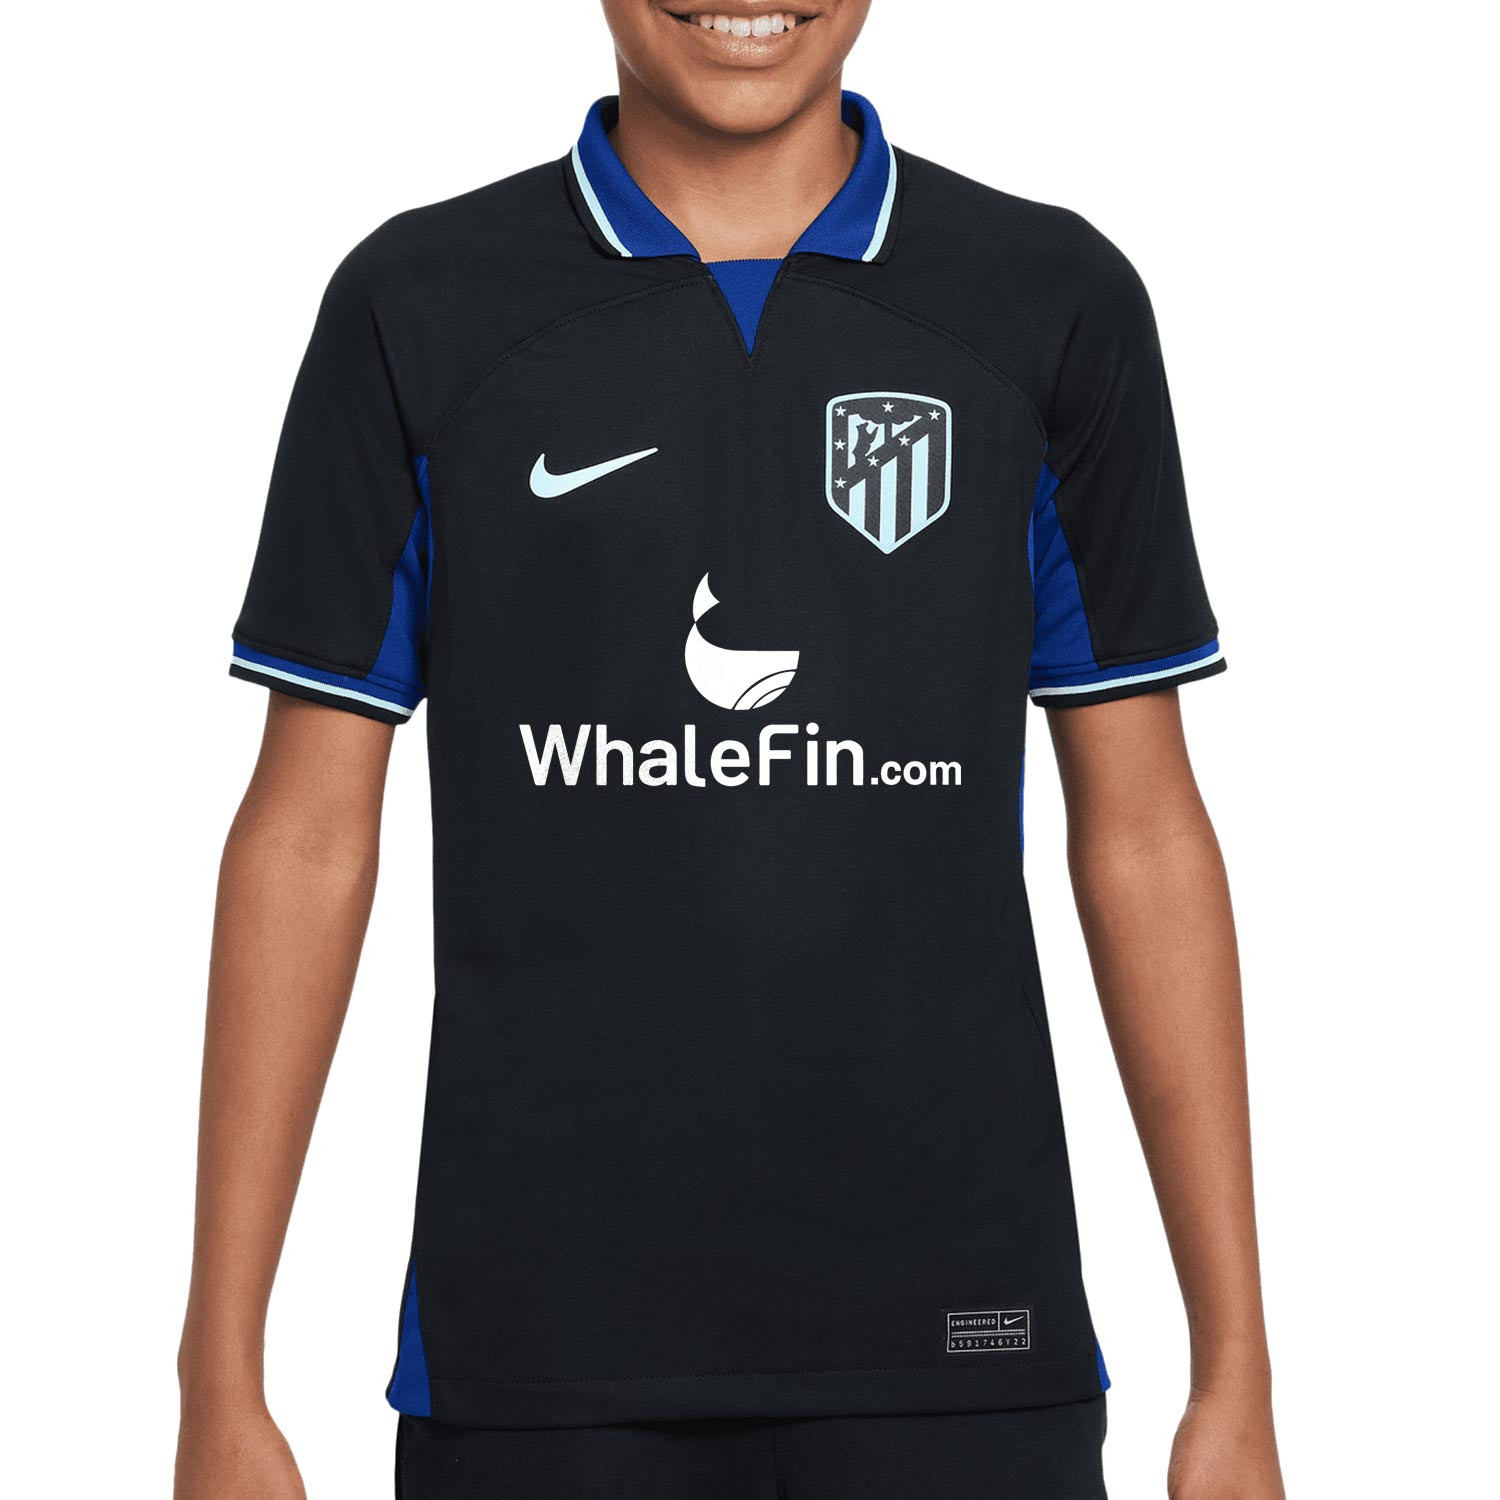 Barcelona Camiseta niño oficial, negro algodón paseo